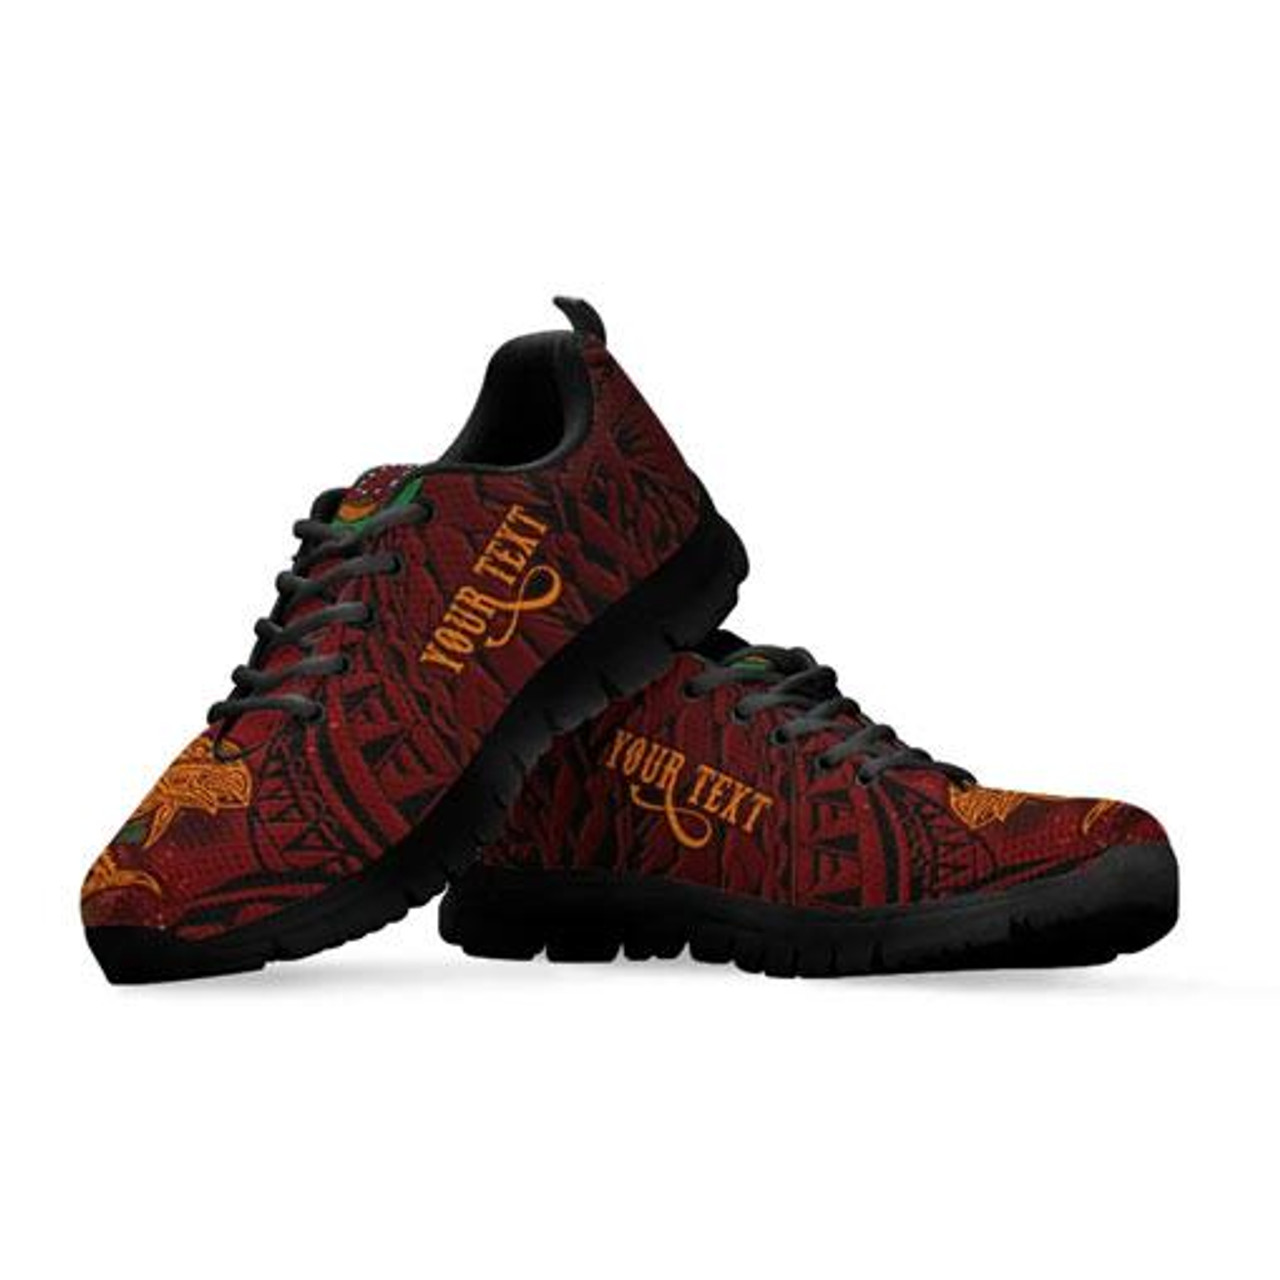 Pohnpei Custom Personalised Sneakers - Tribal Tuna Fish 2